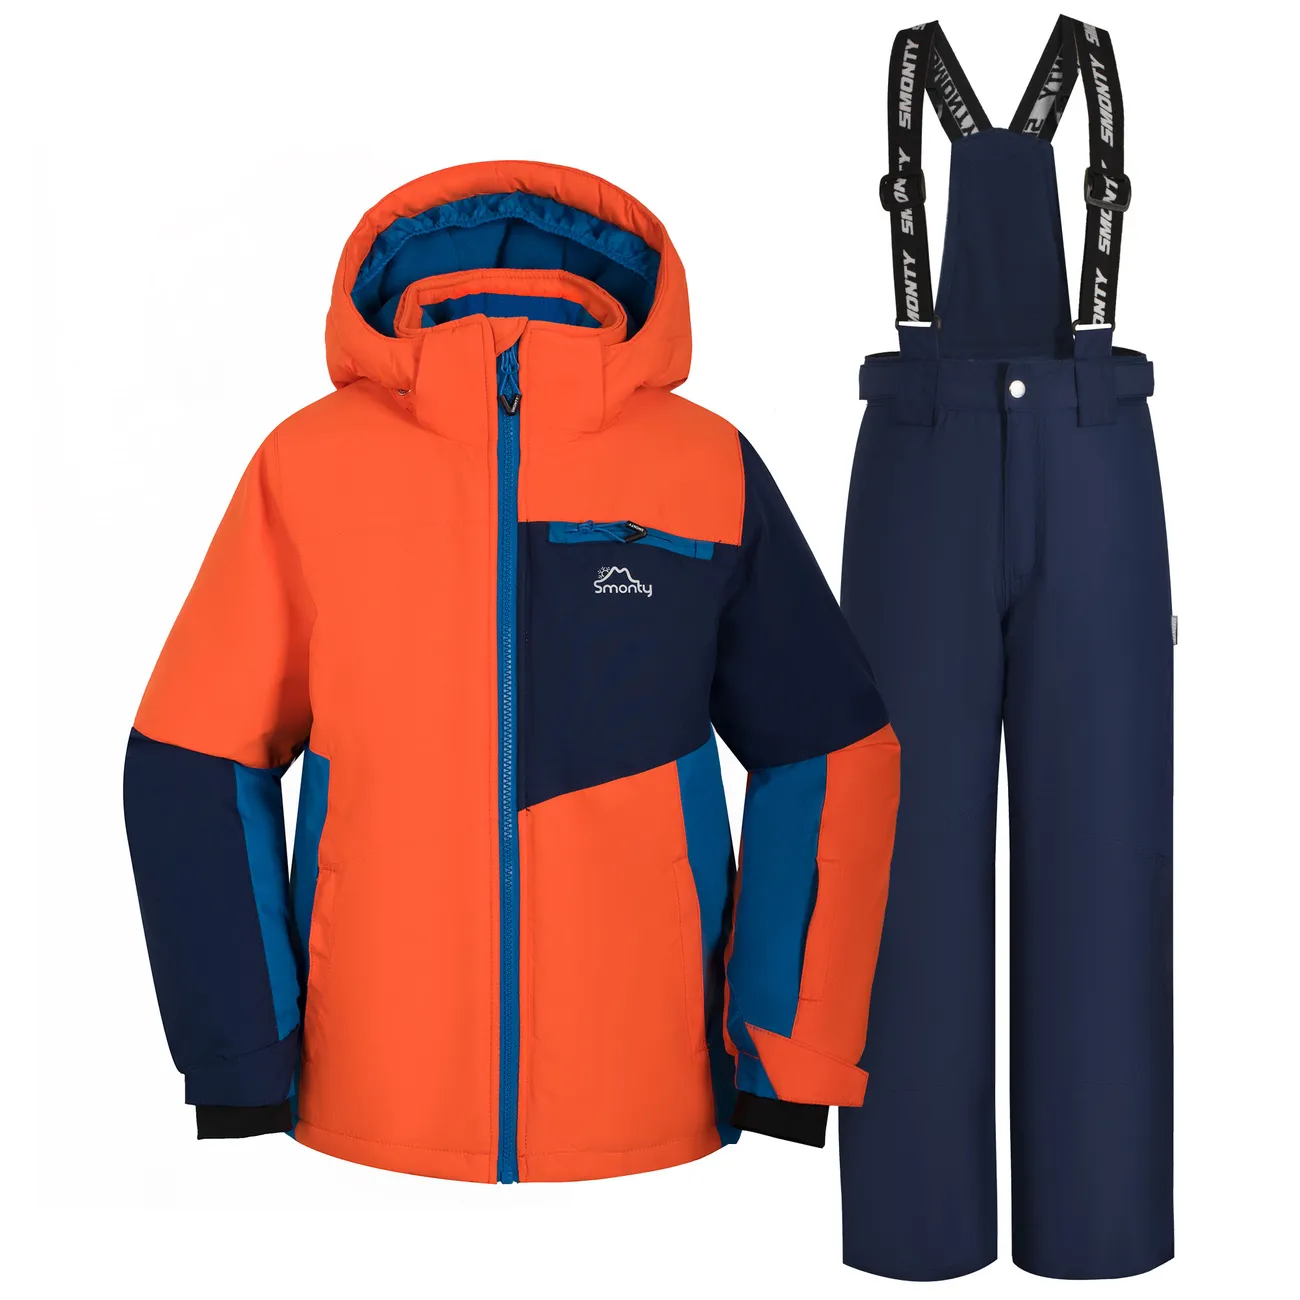 SMONTY Kids Snow Suit for Girls Winter Ski Jacket & Pants Set